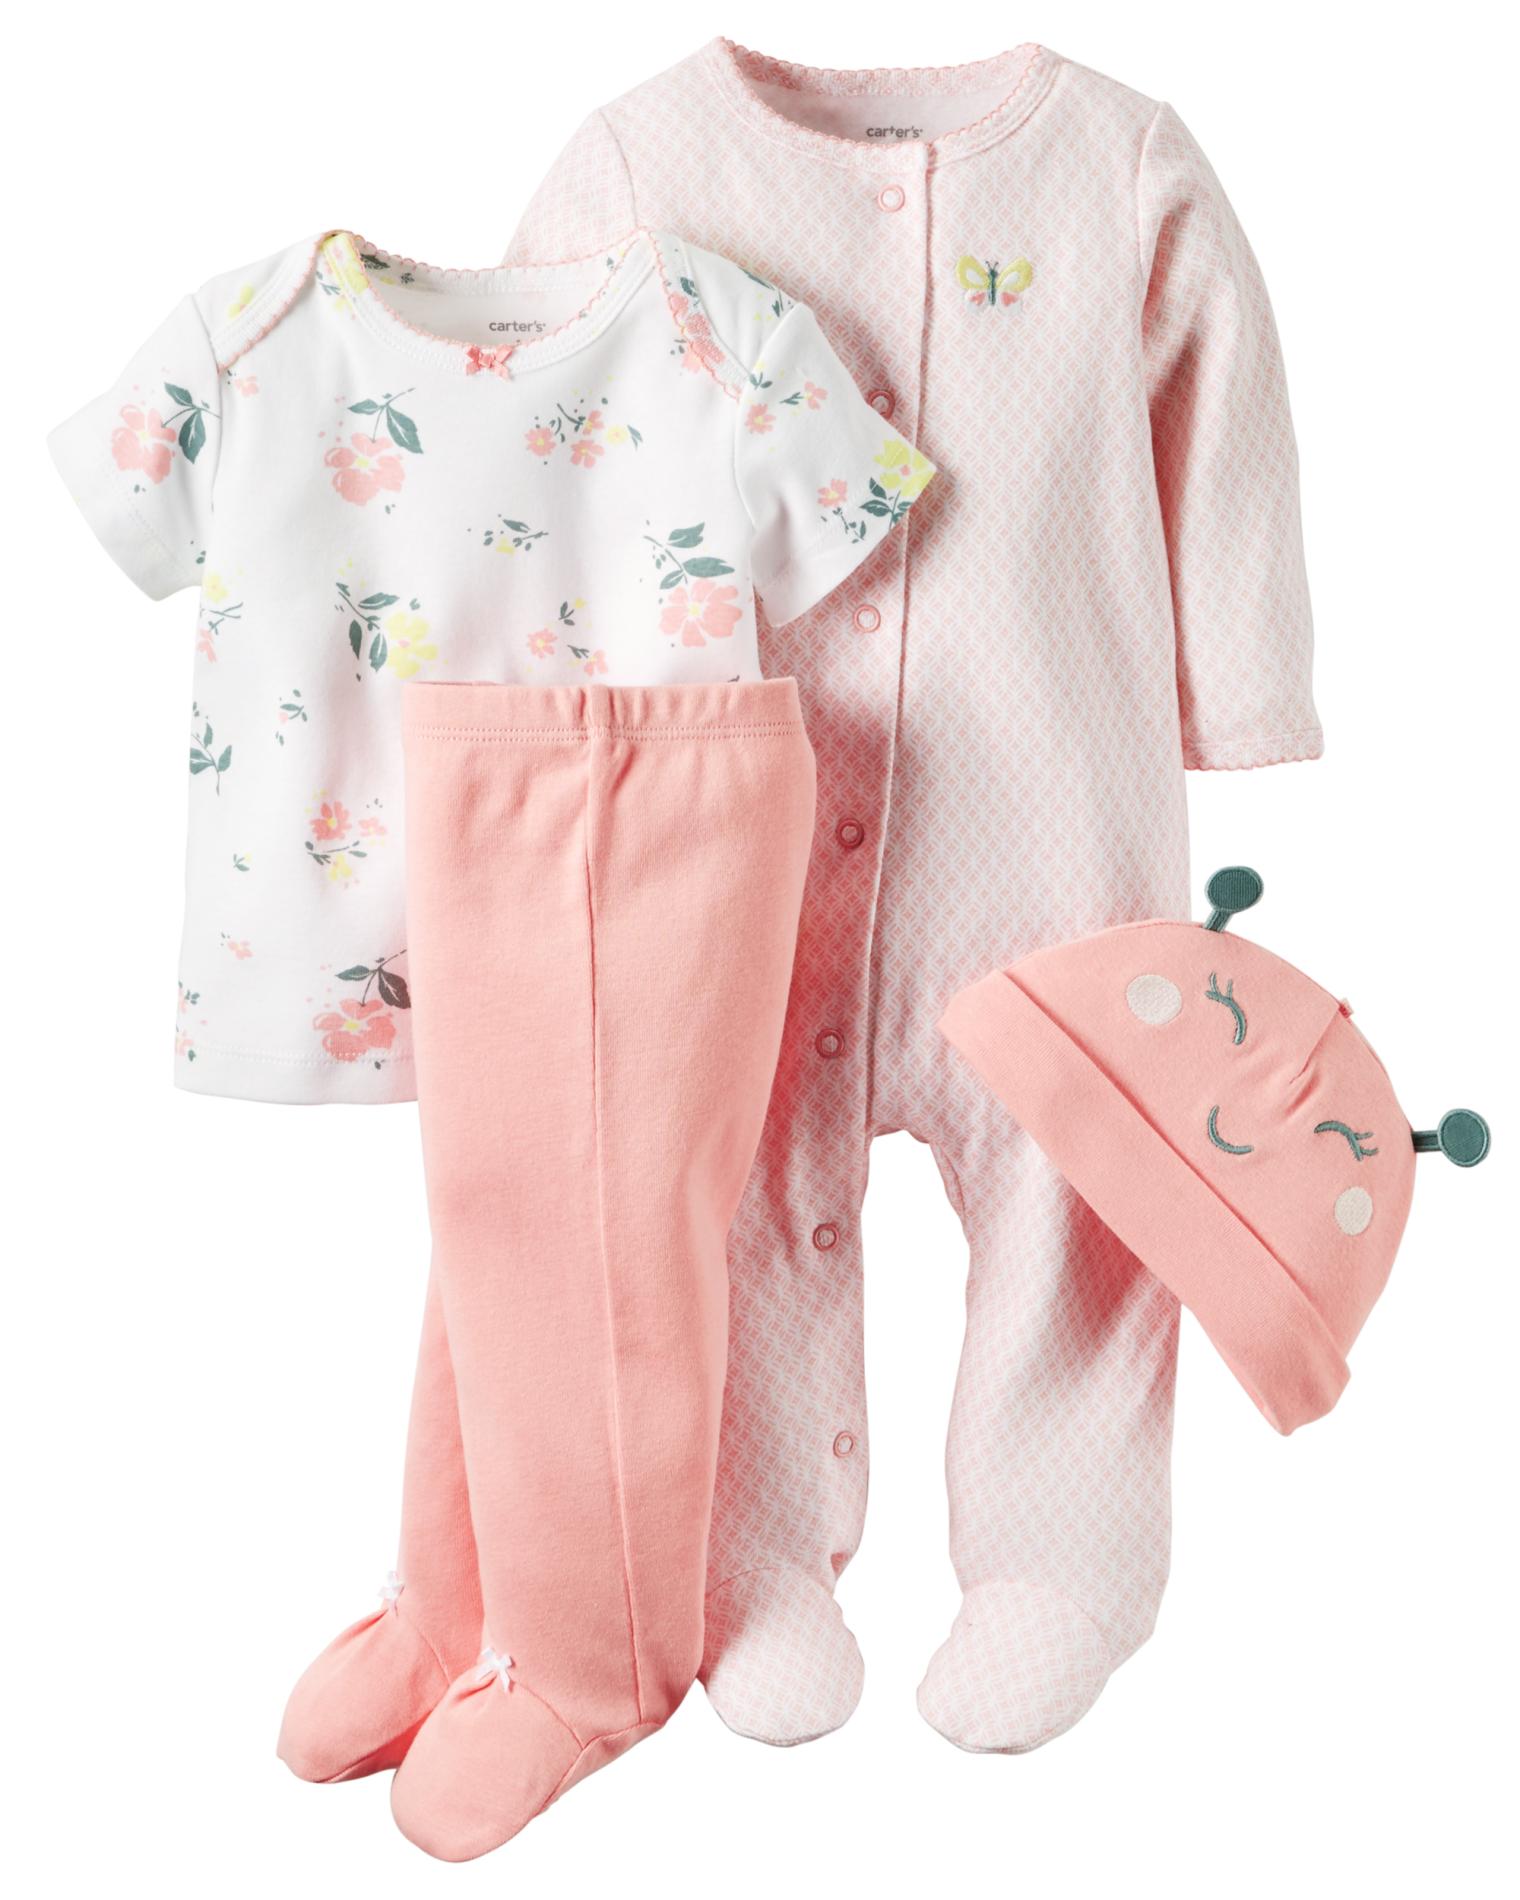 Carter's Newborn Girls' Bodysuit, Top, Pants & Hat - Floral & Butterfly